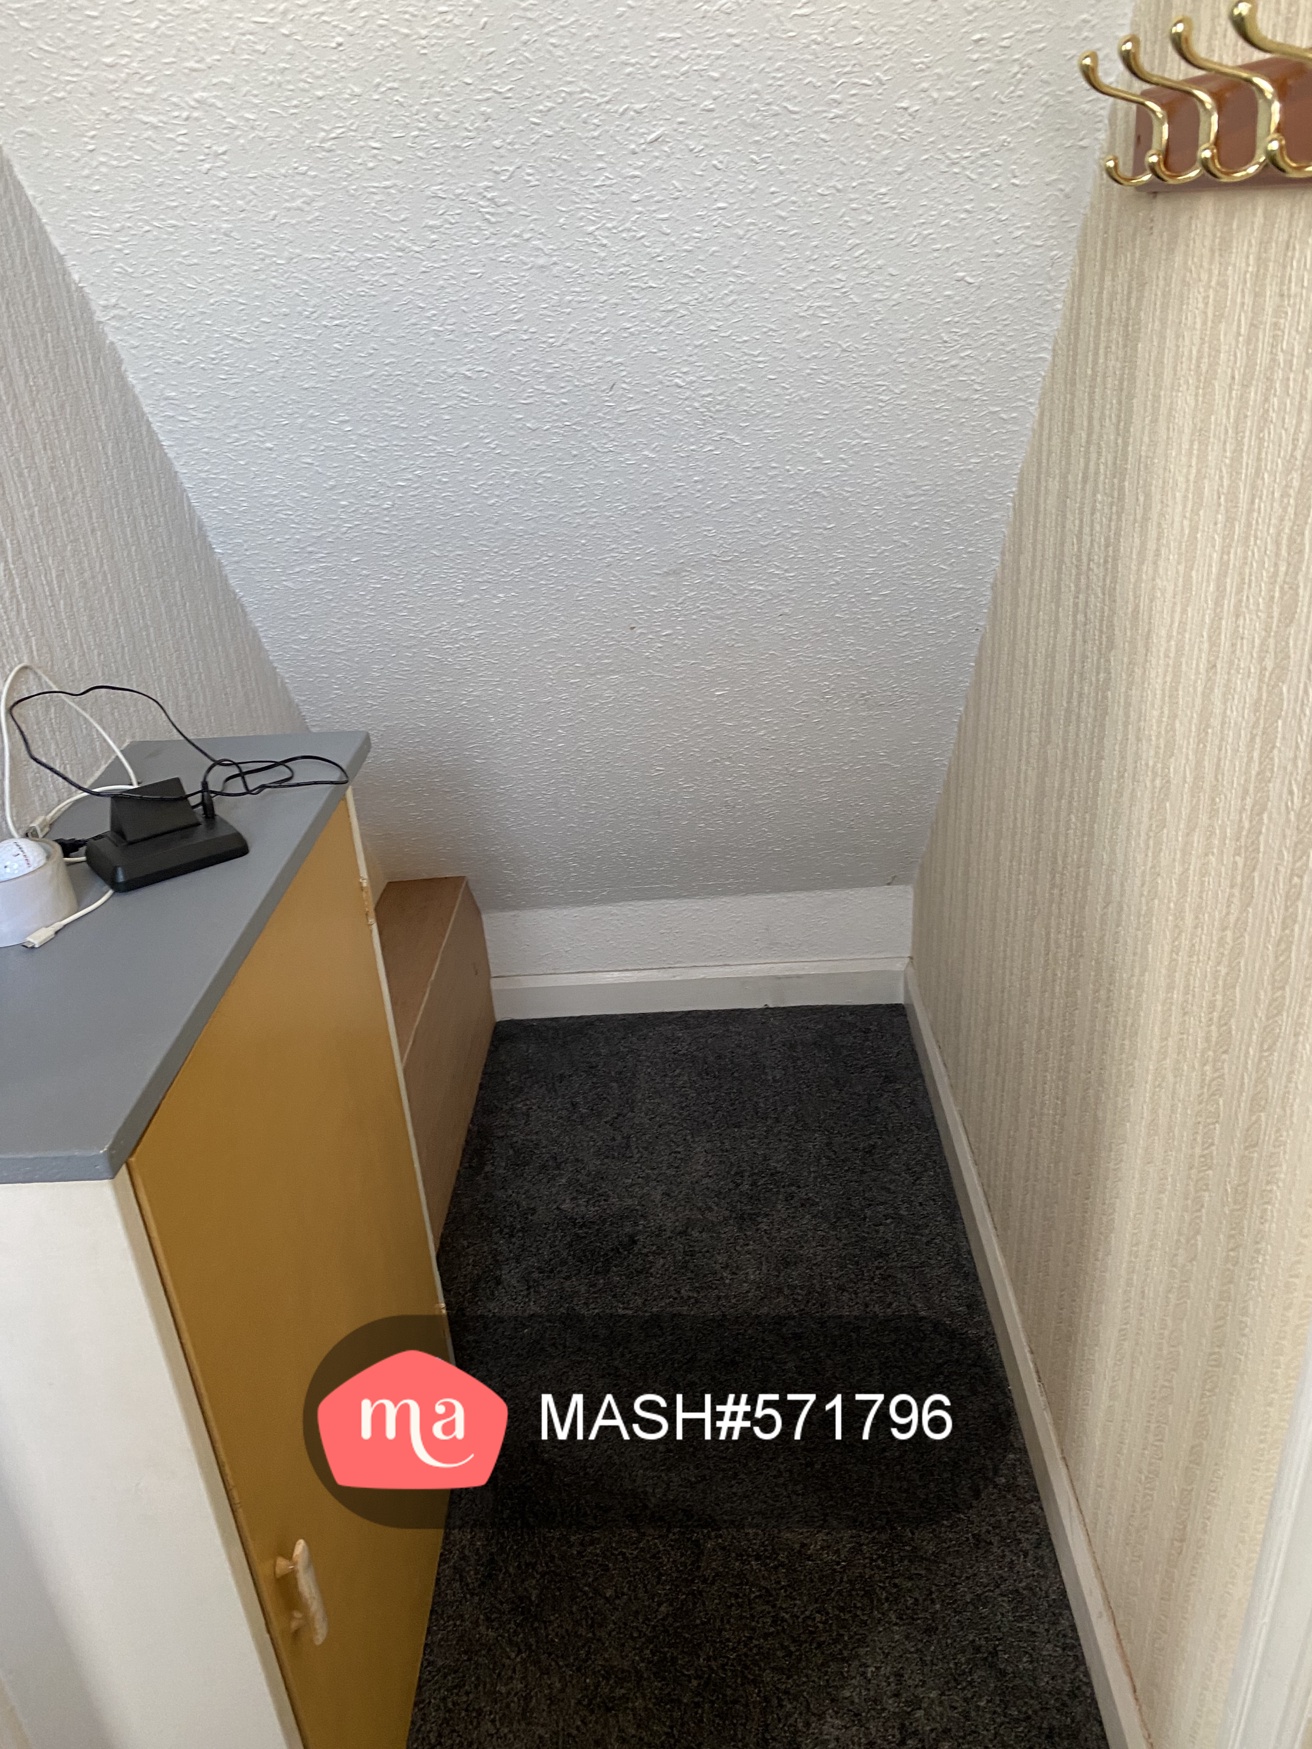 2 Bedroom Flat to rent in Halesowen - Mashroom